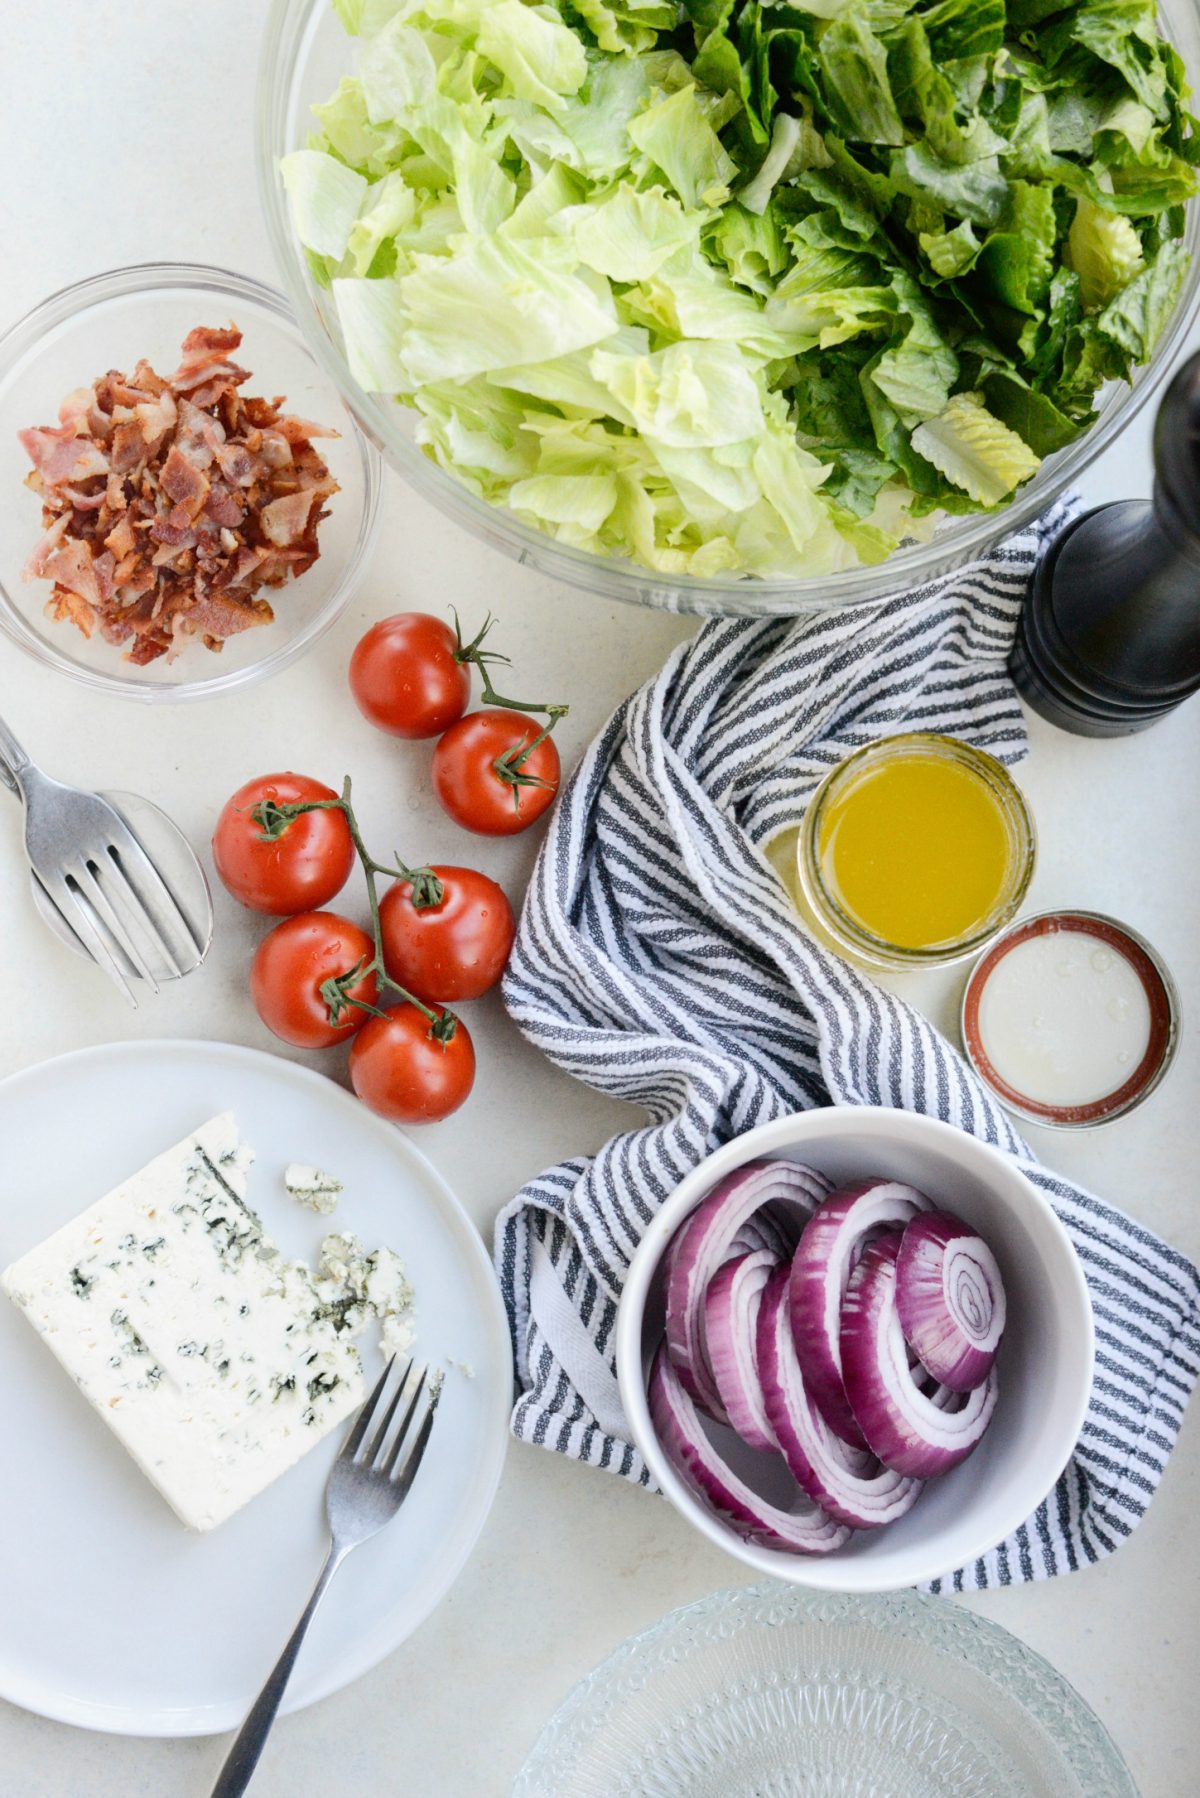 Machus Red Fox Salad ingredients